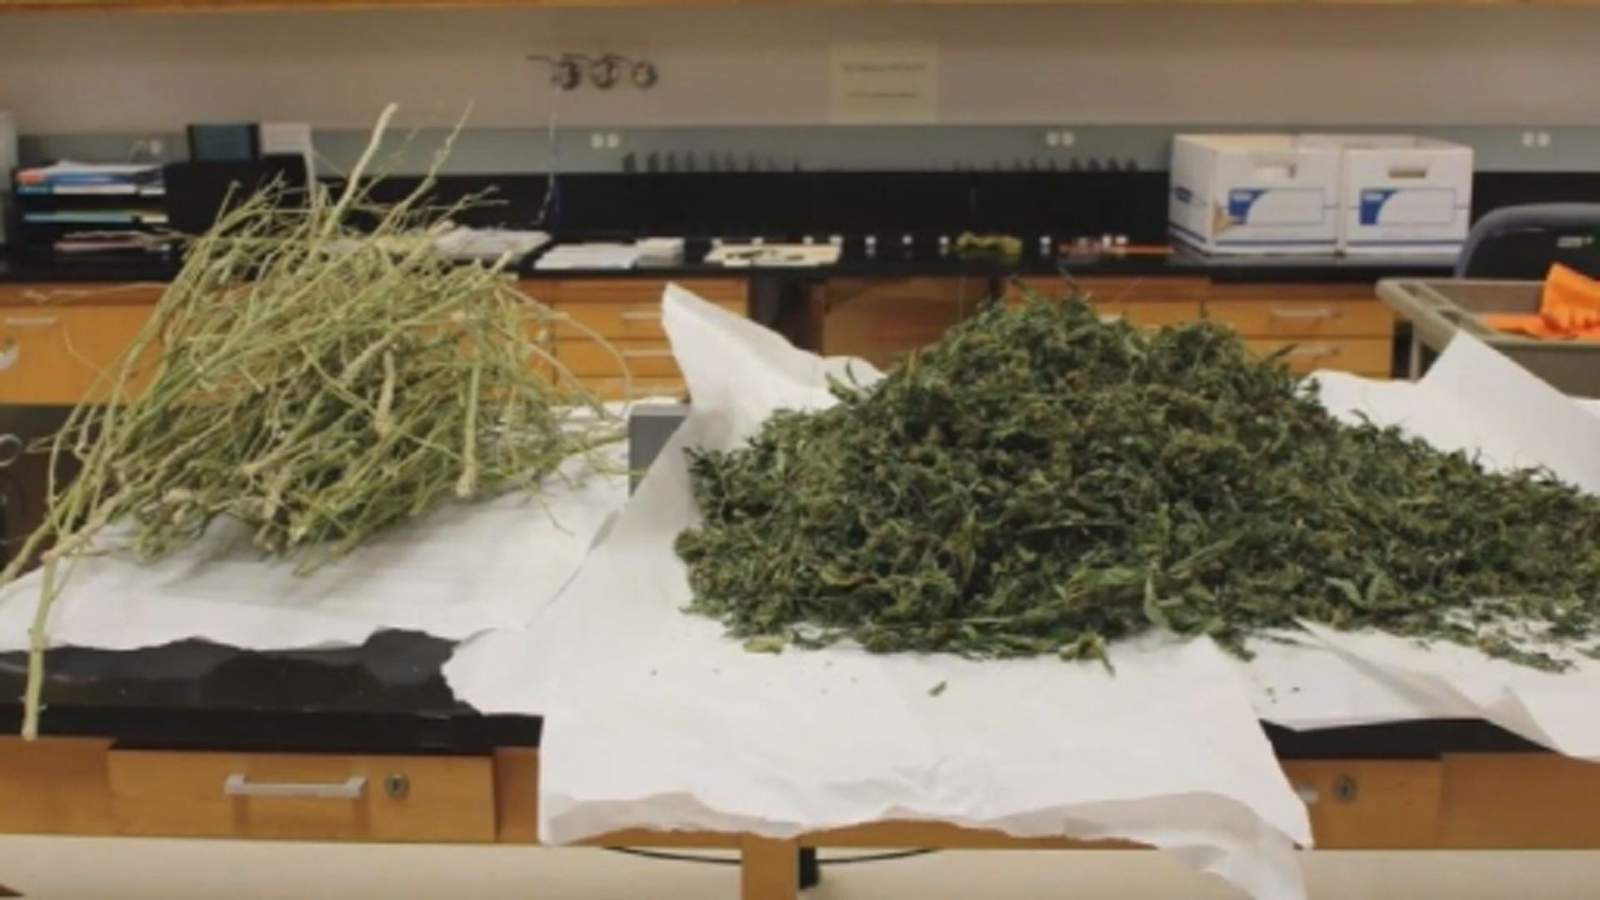 Hemp or Marijuana? Houston lab can finally tell the difference